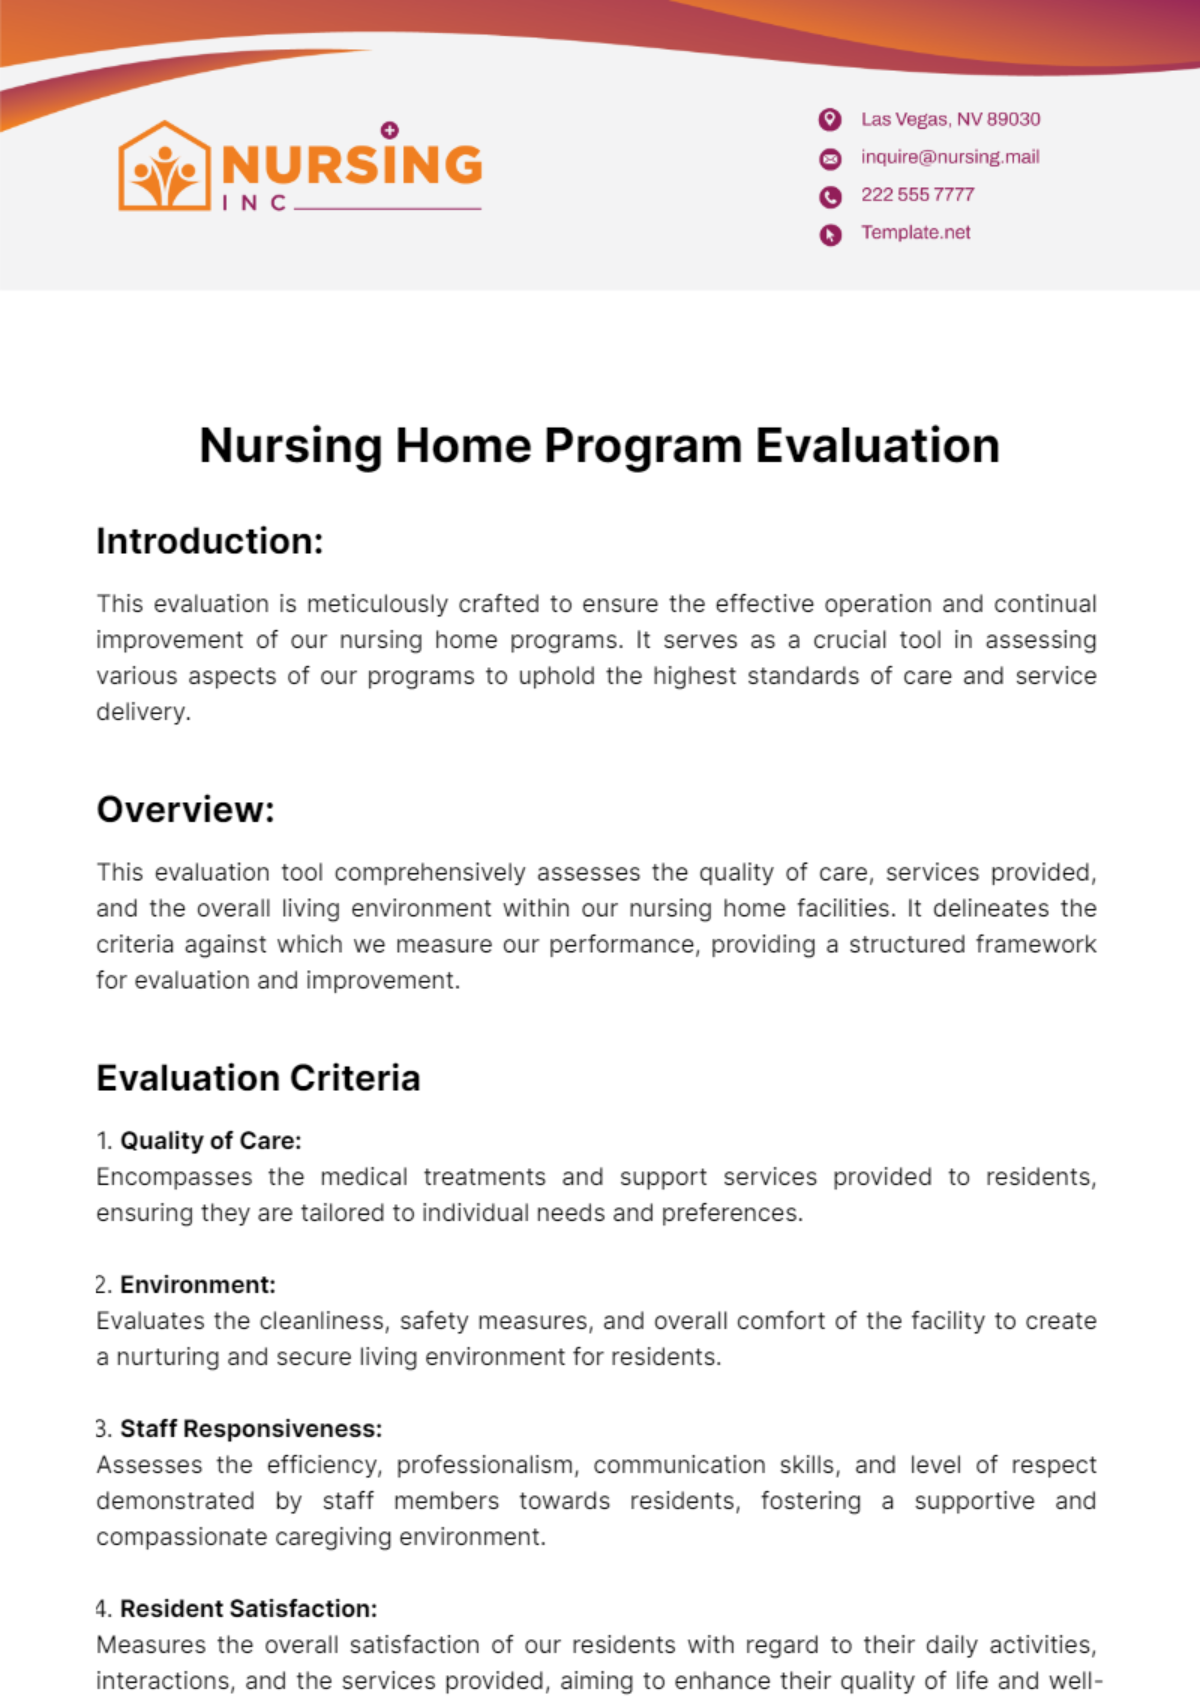 Nursing Home Program Evaluation Template